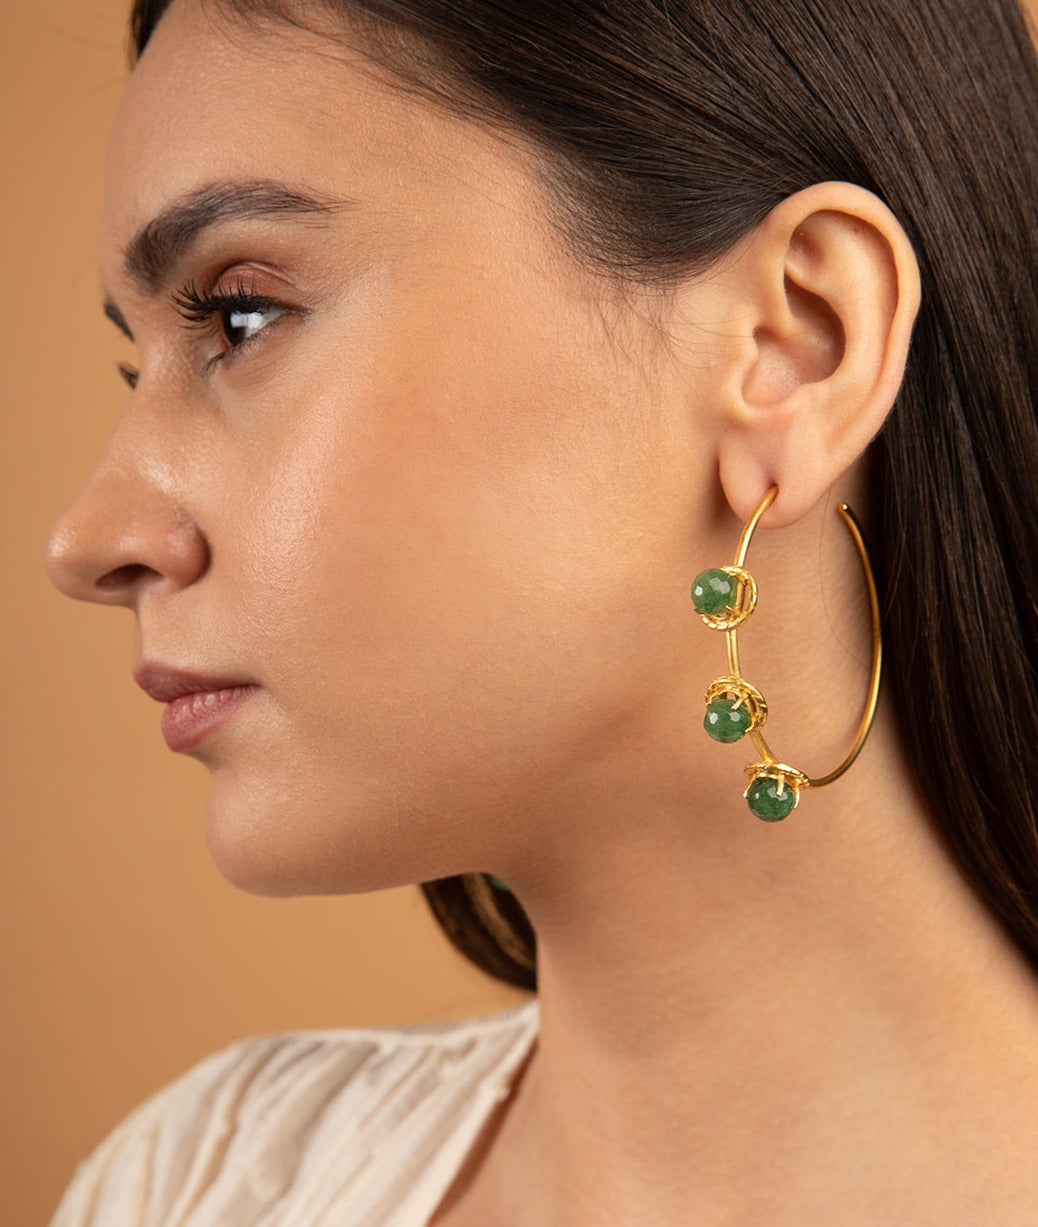 Ayka Earrings 18 g With Natural Cut Zed Stones 22K Gold-Plating, Matte - ZEWAR Jewelry